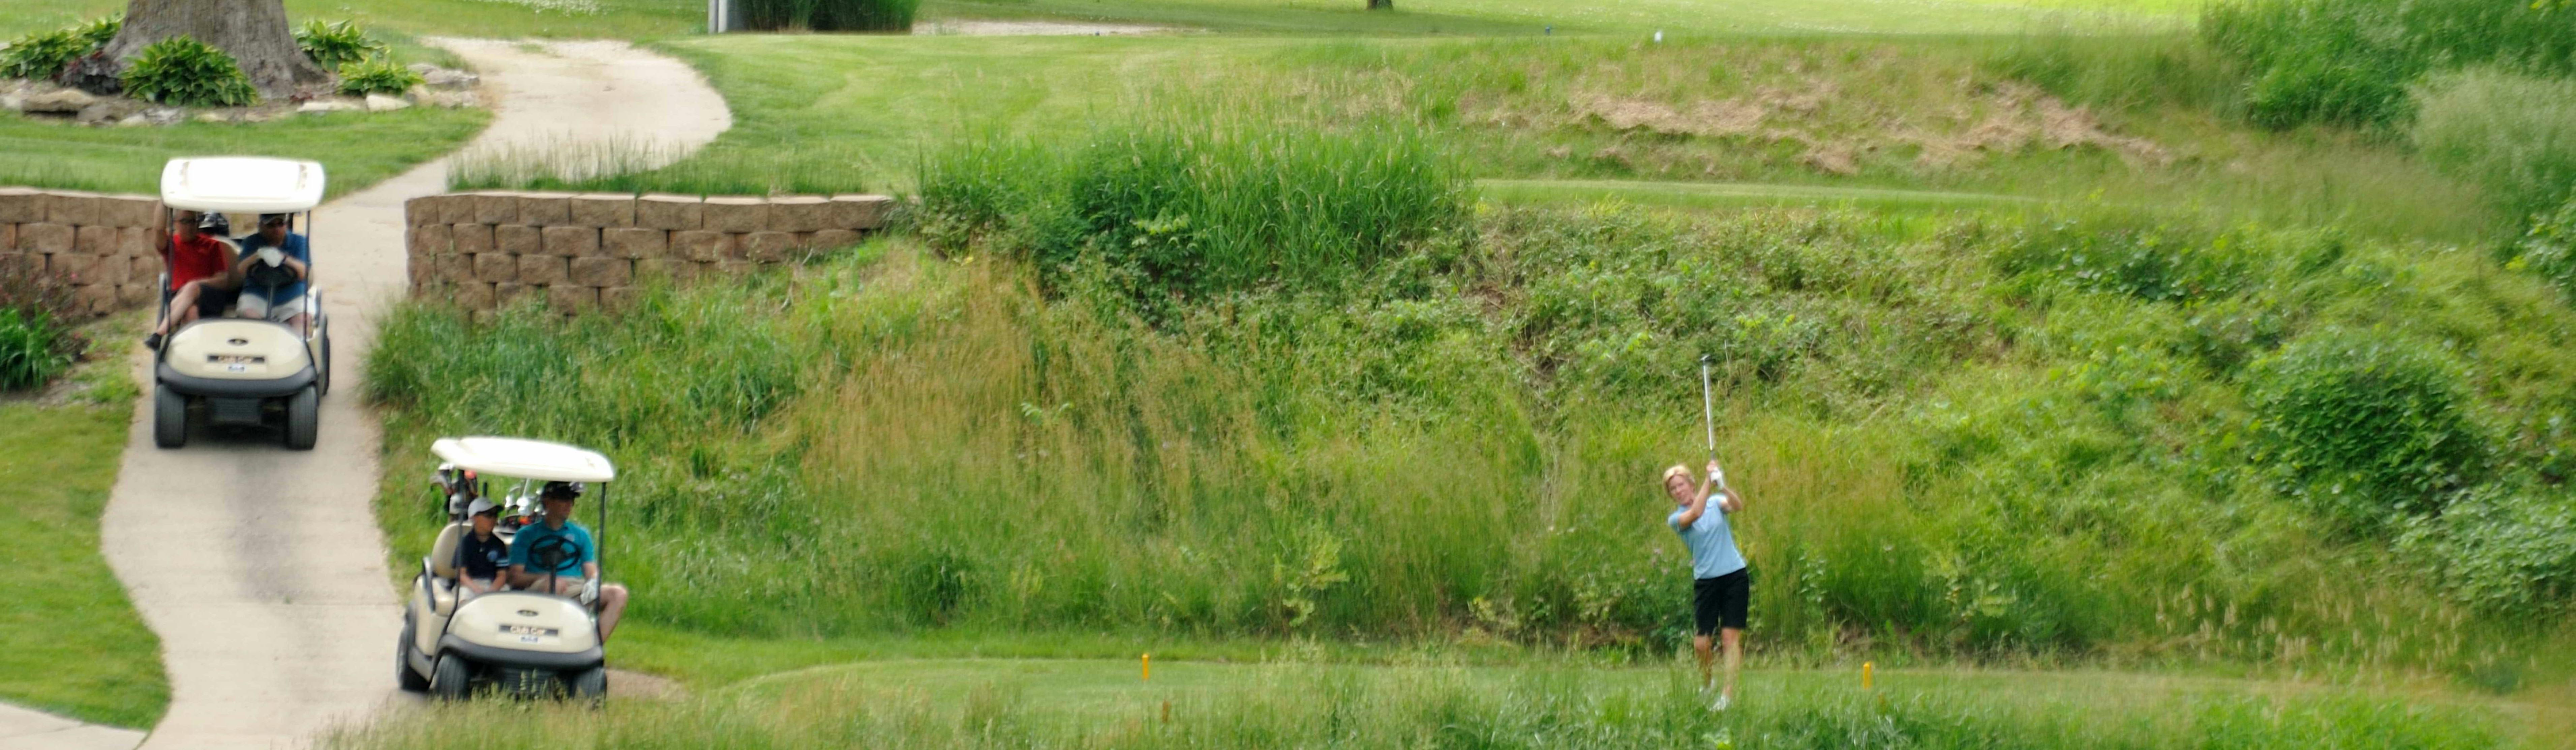 Clinton County's Plattsburg Country Club draws golfers from near and far